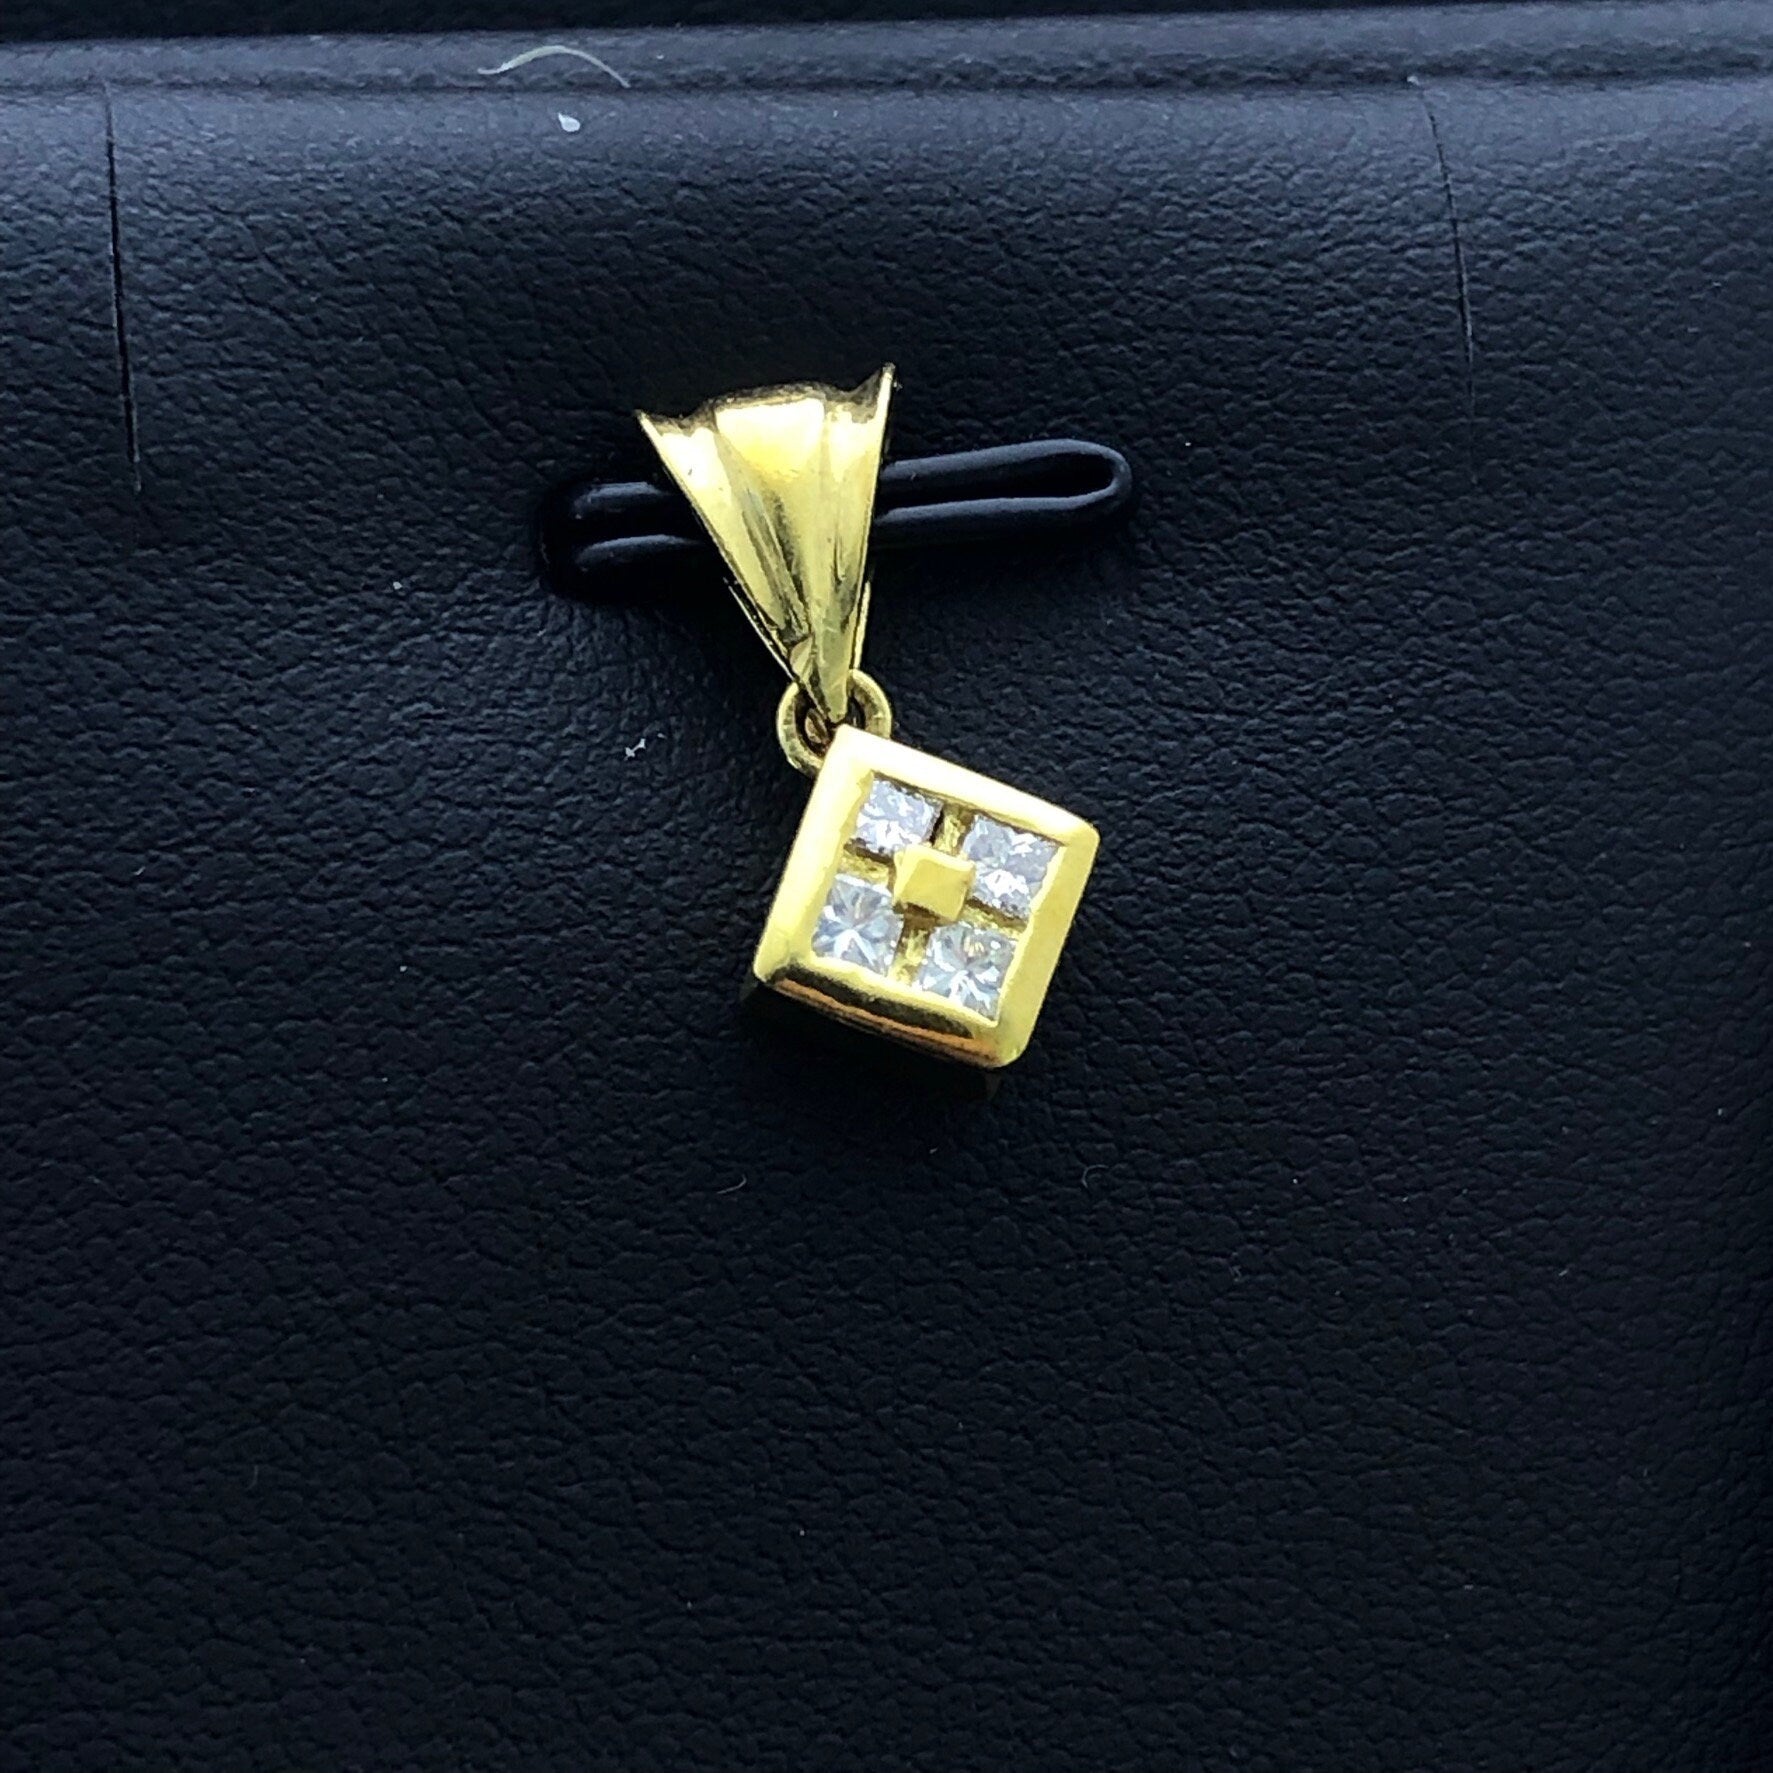 LIV 14k Yellow Gold & Diamonds Princess Cut Design Pendant Necklace Gift